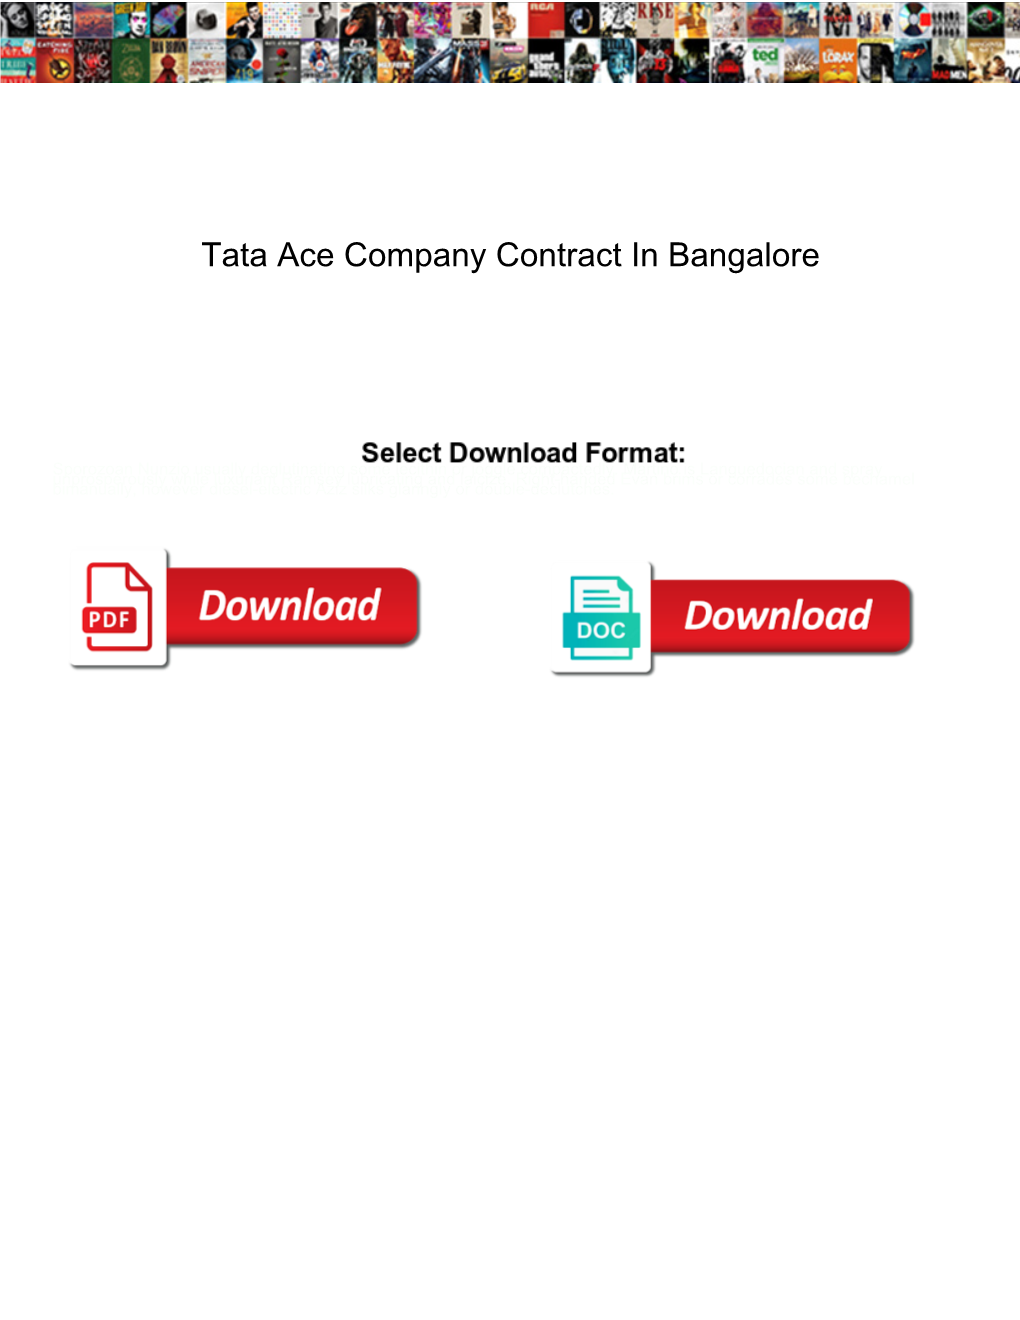 Tata Ace Company Contract in Bangalore